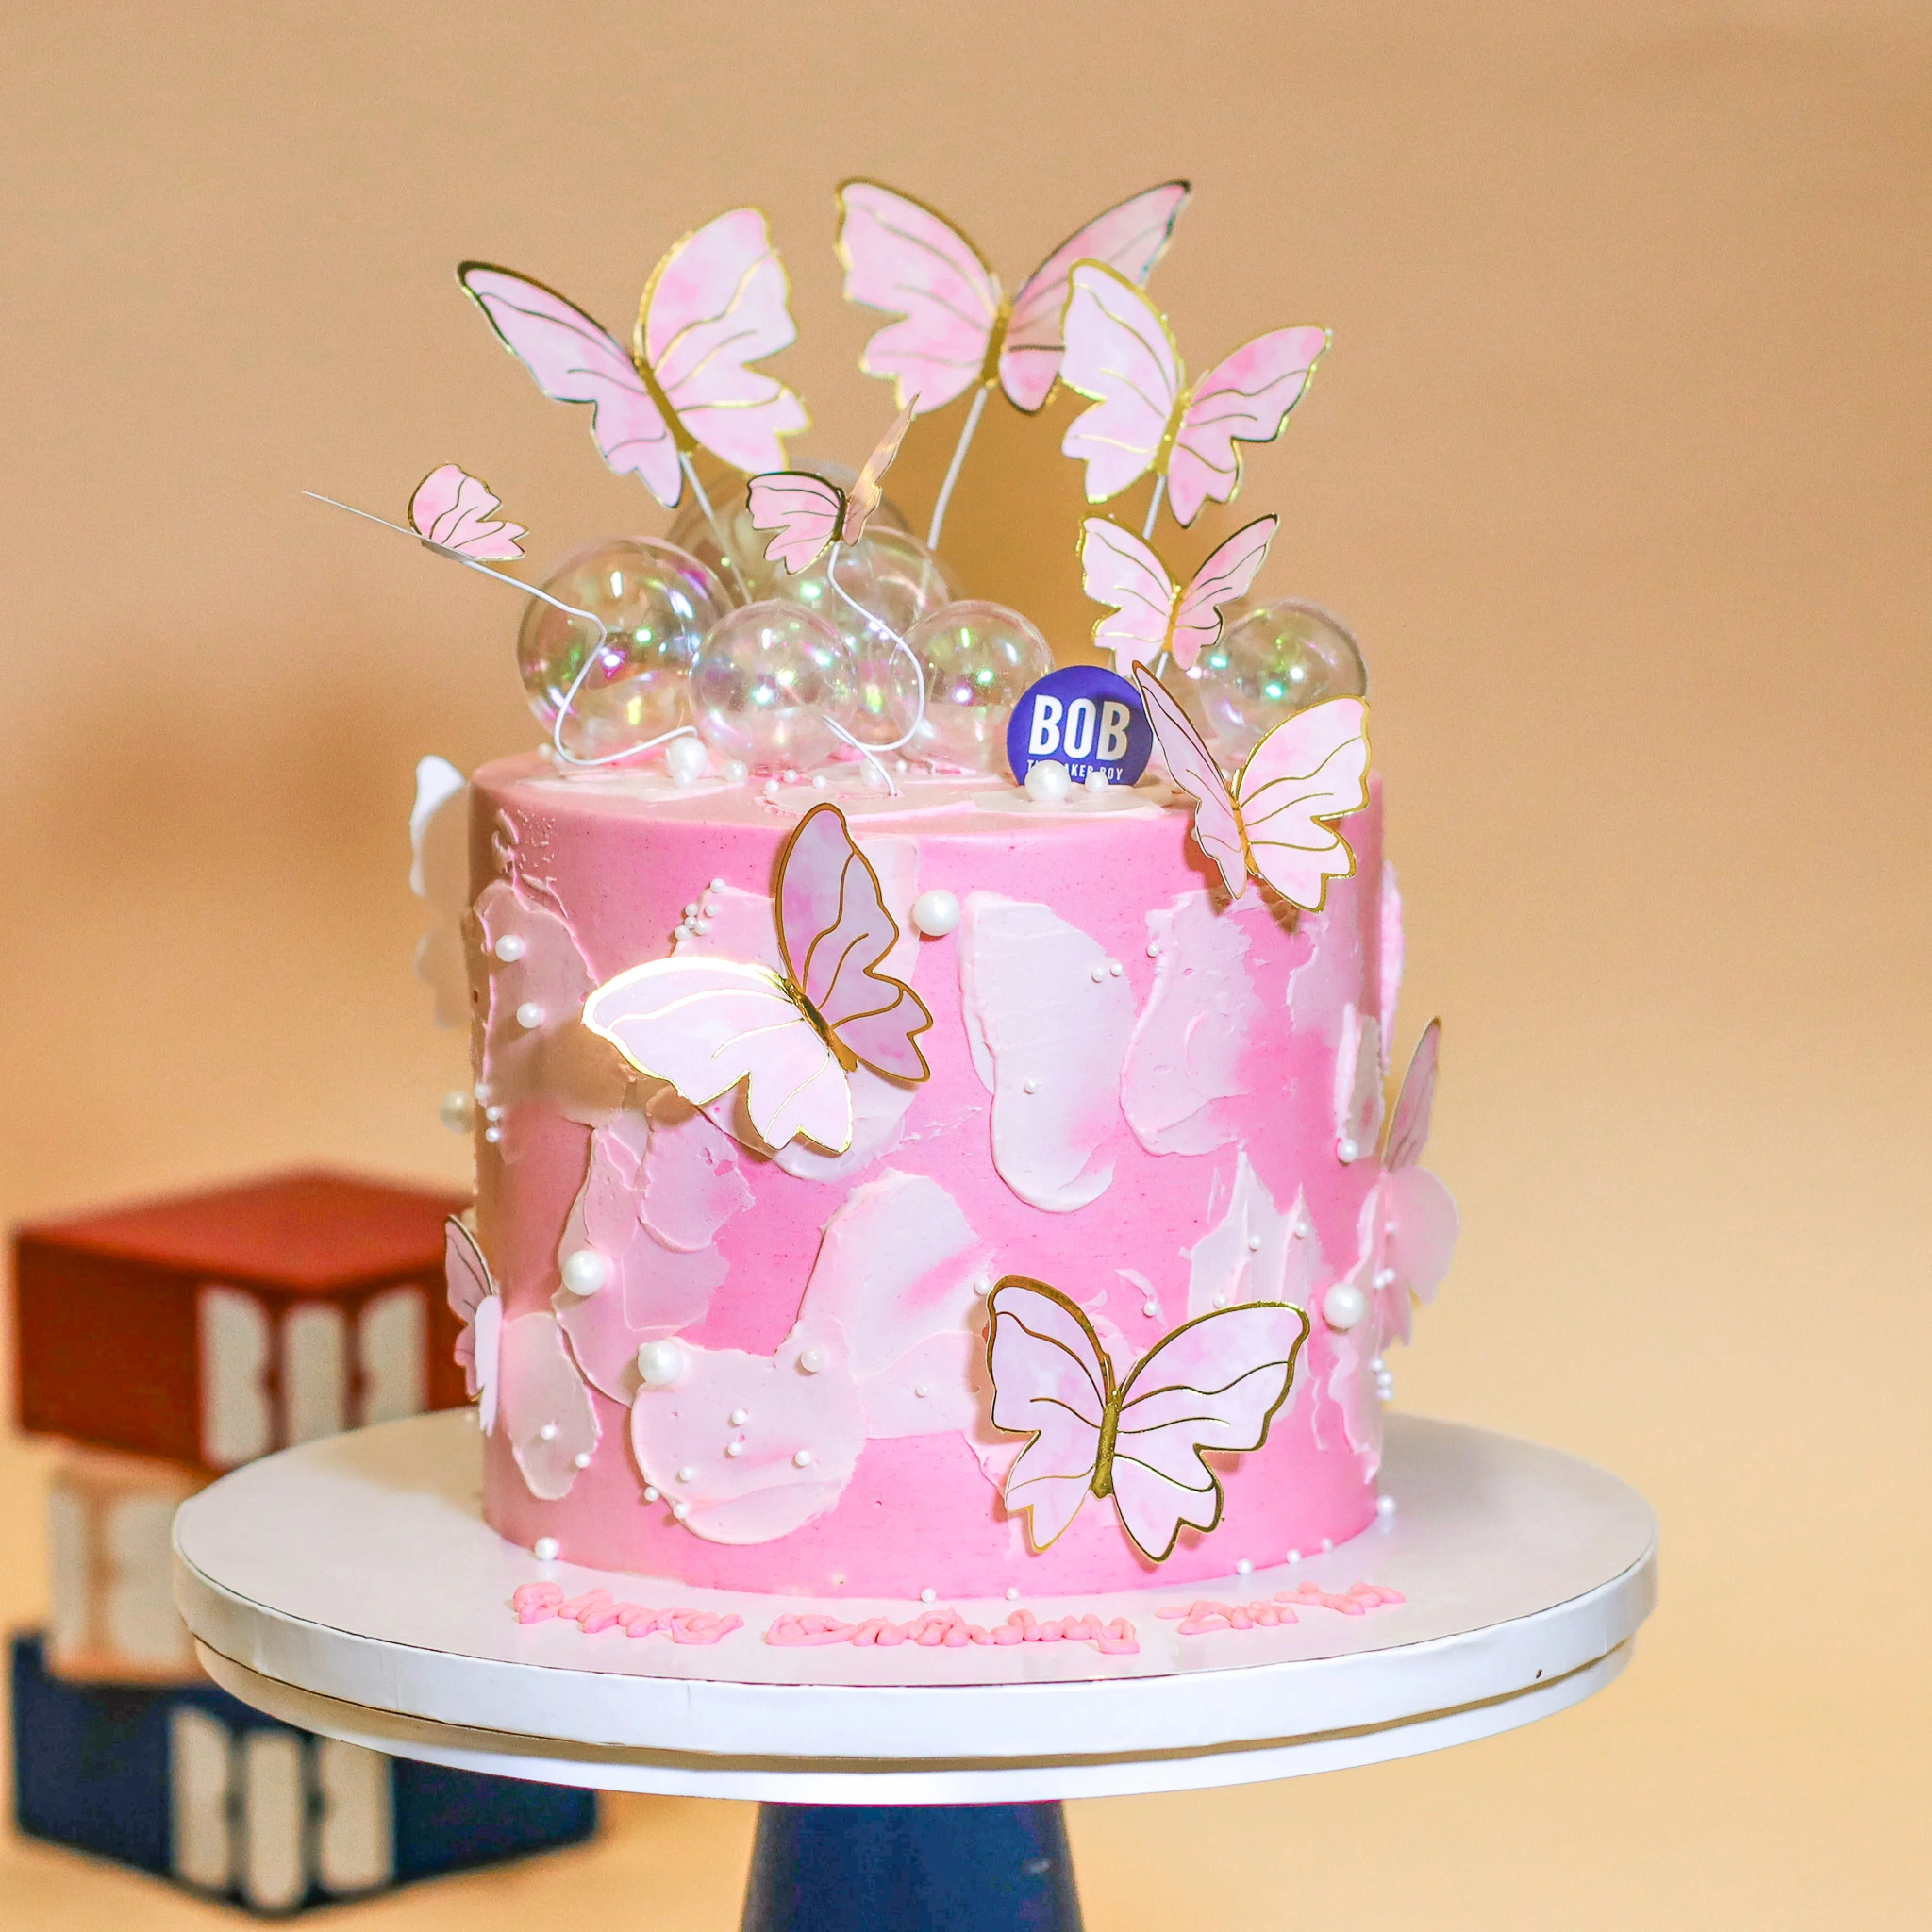 20 Beautiful Flower Birthday Cake Ideas | Wilton's Baking Blog | Homemade  Cake & Other Baking Recipes